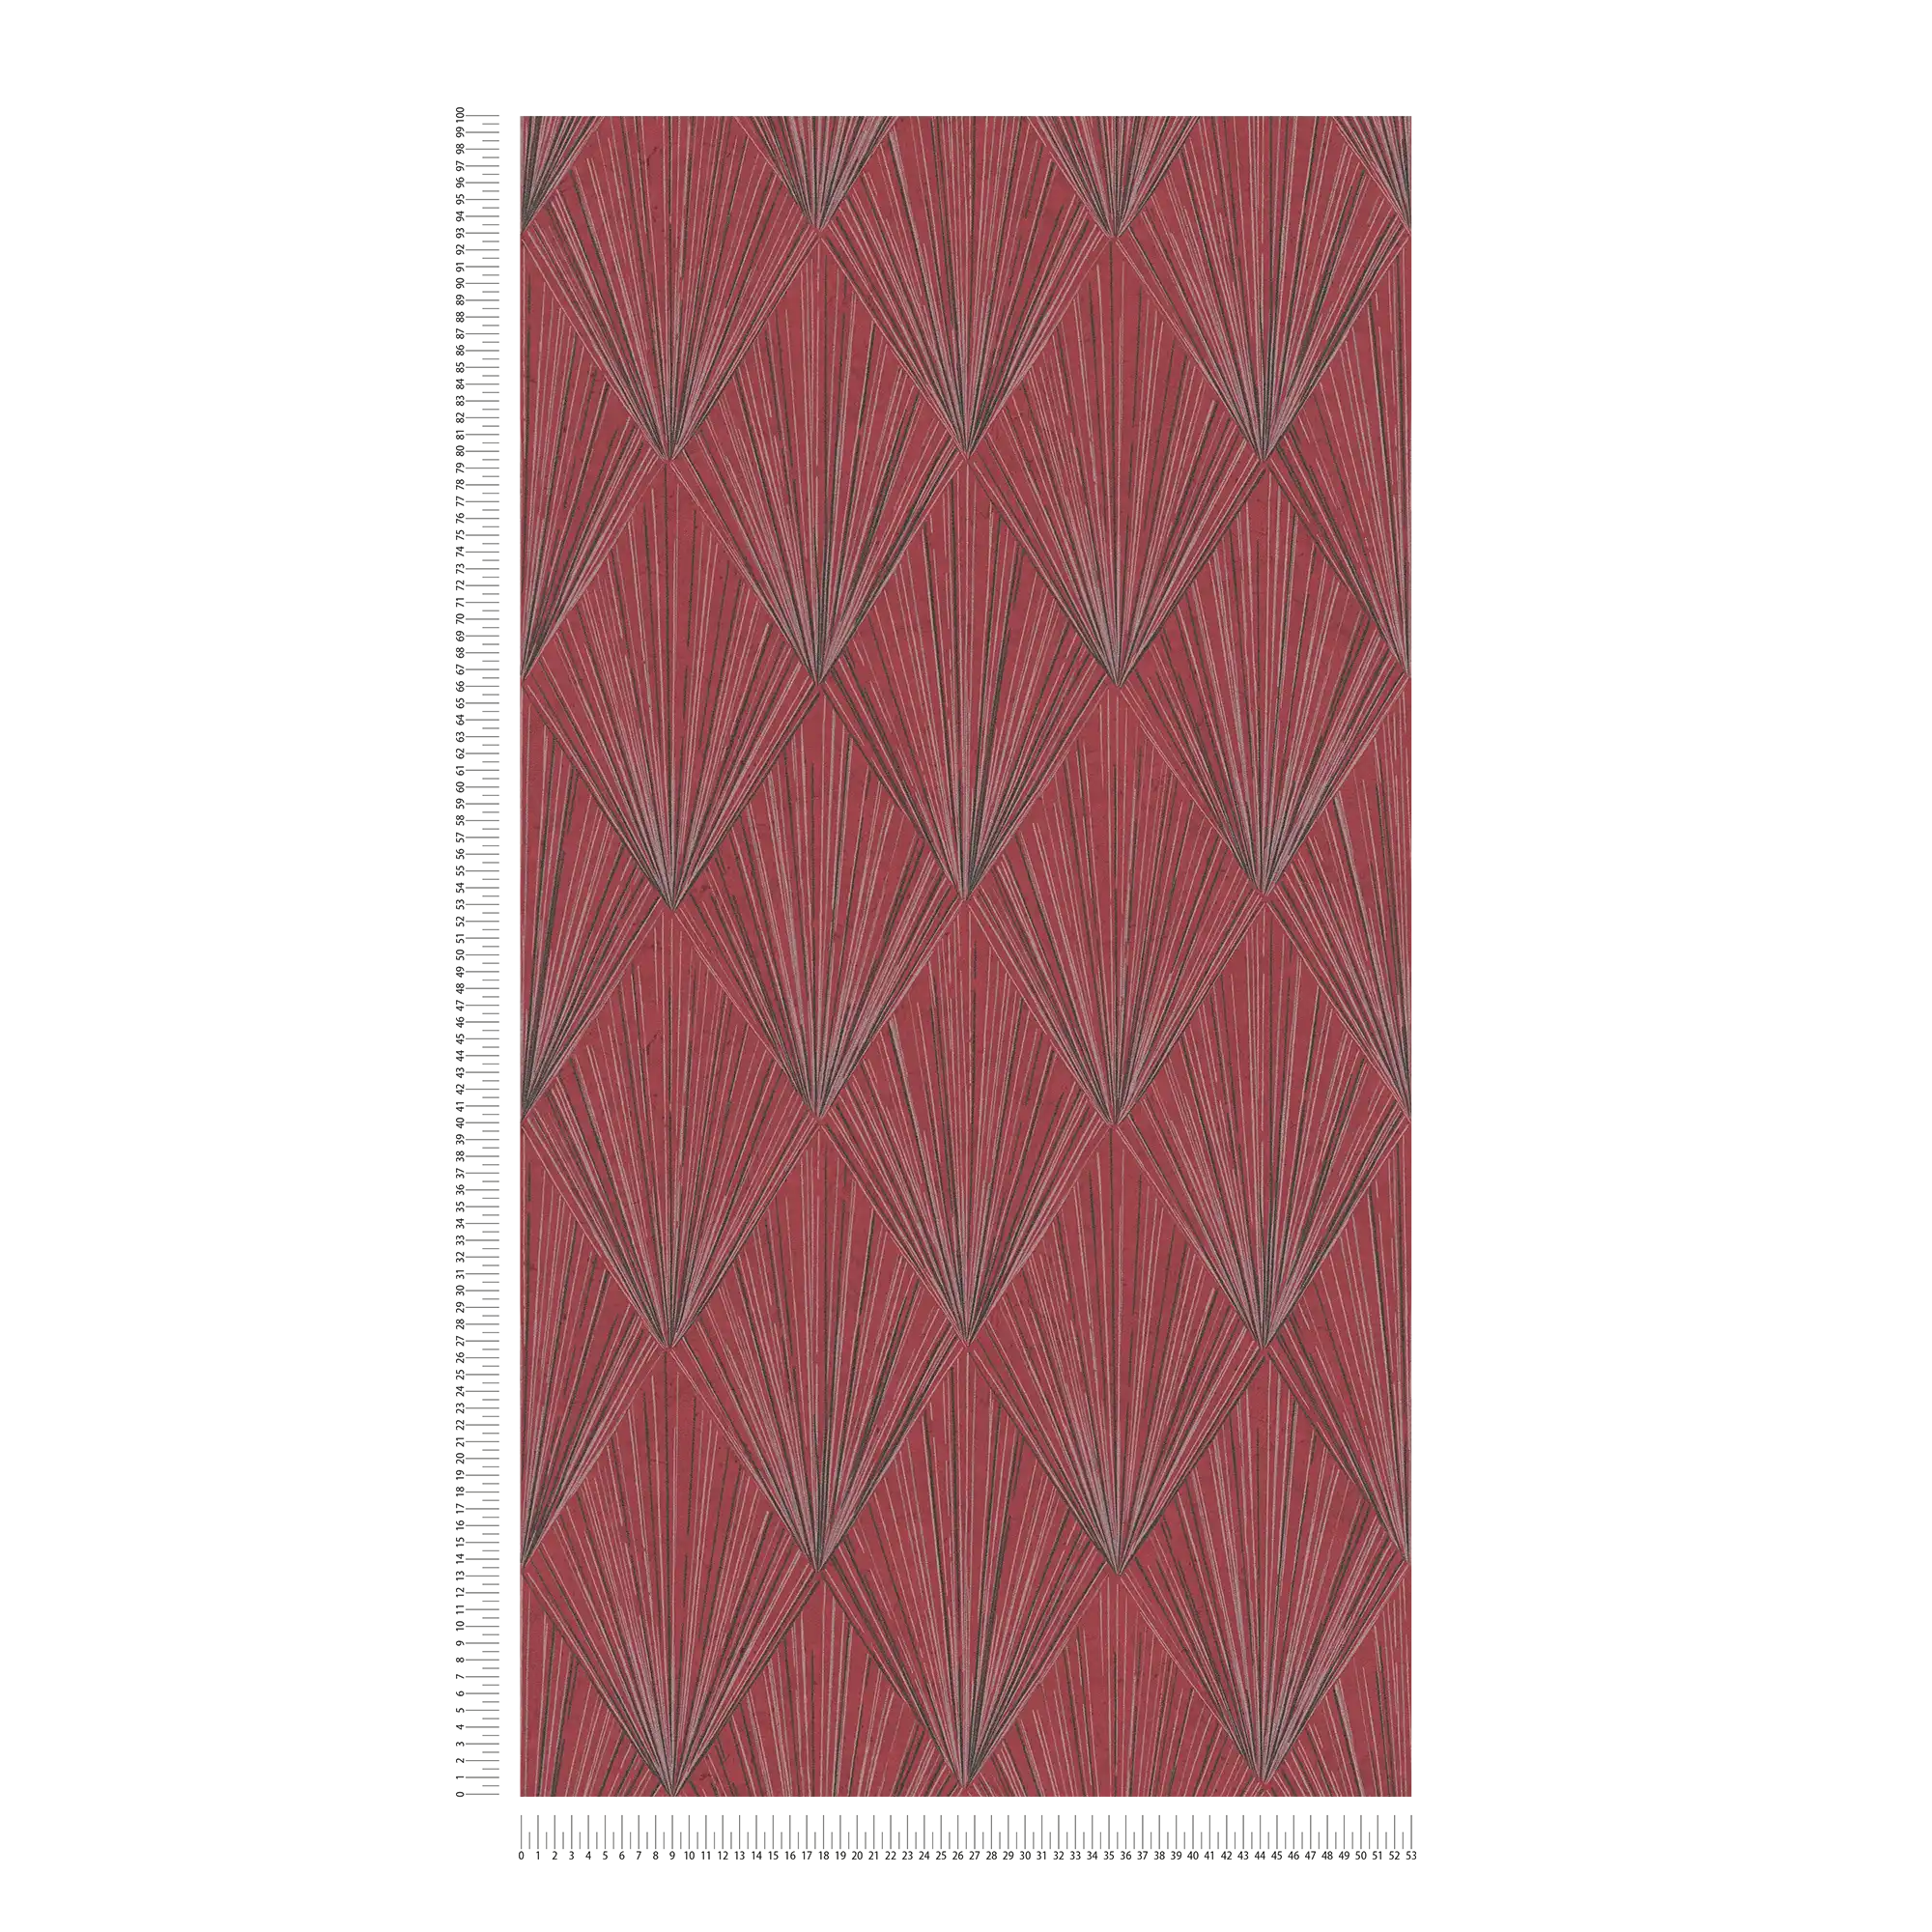             Wallpaper with modern art deco pattern & metallic effect - metallic, red, black
        